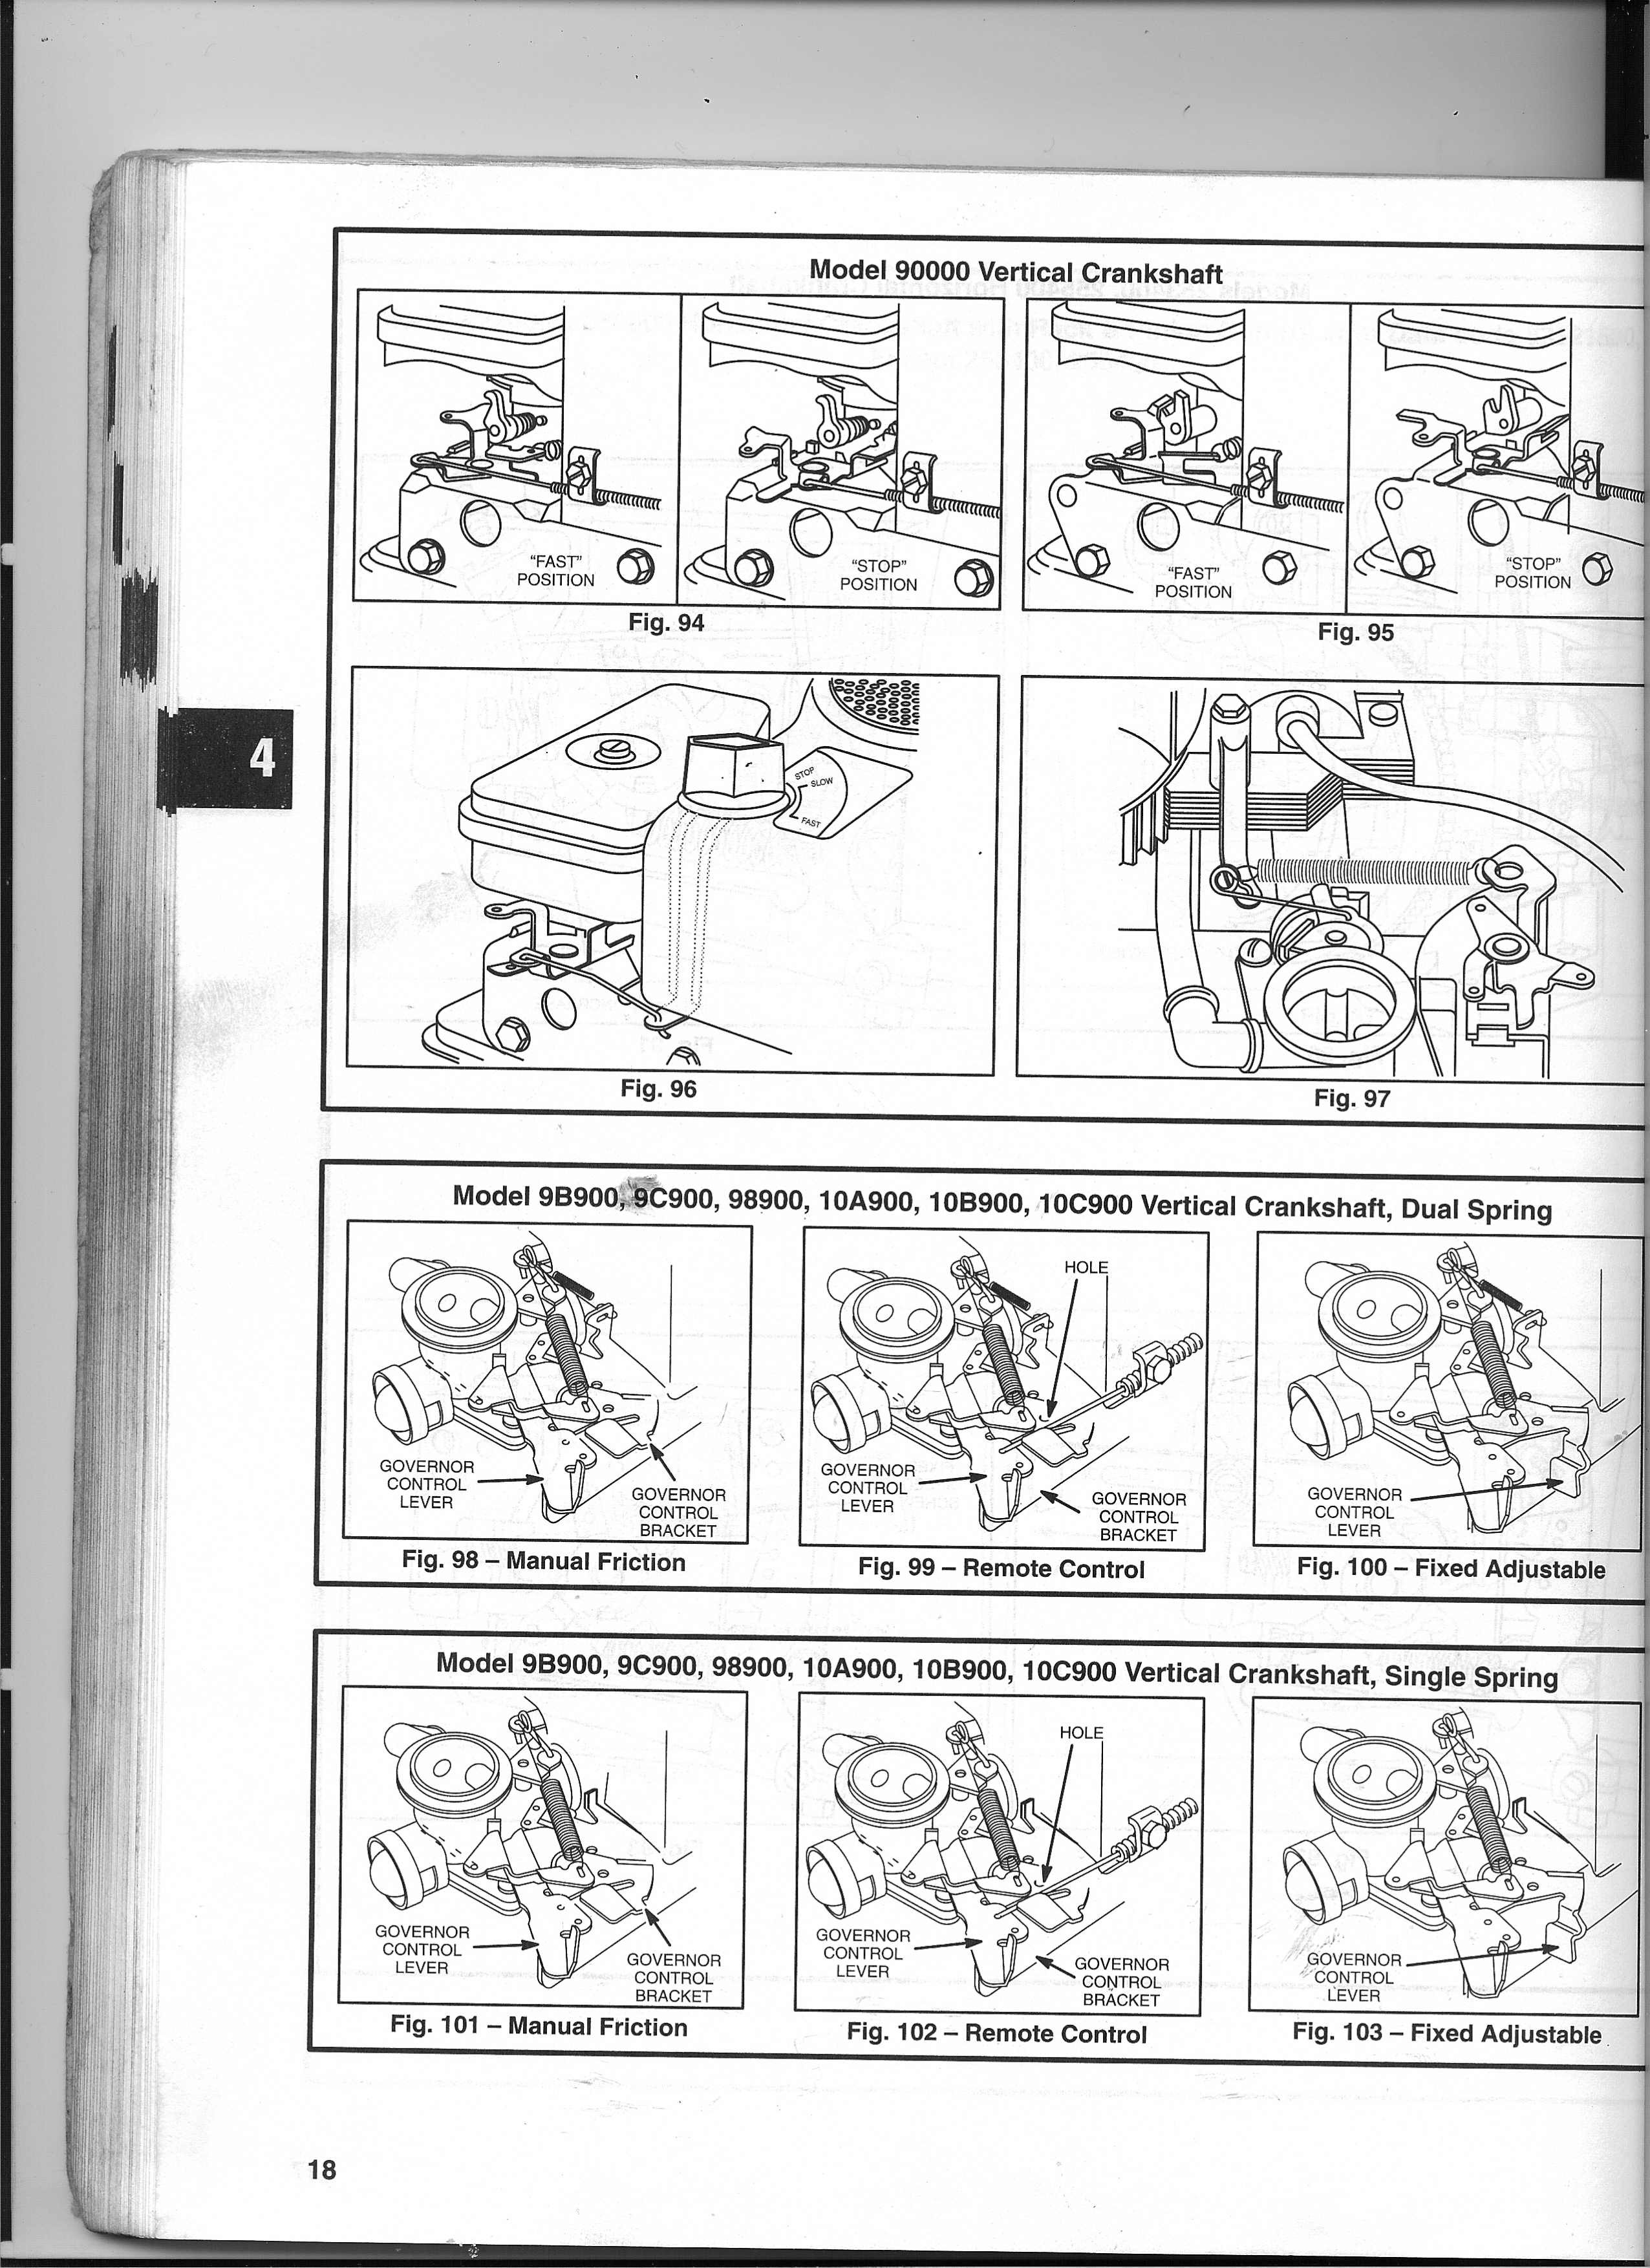 8 Hp Briggs and Stratton Engine Parts Diagram Charming 8hp Briggs and Stratton Engine Manual Ideas Simple Wiring Of 8 Hp Briggs and Stratton Engine Parts Diagram